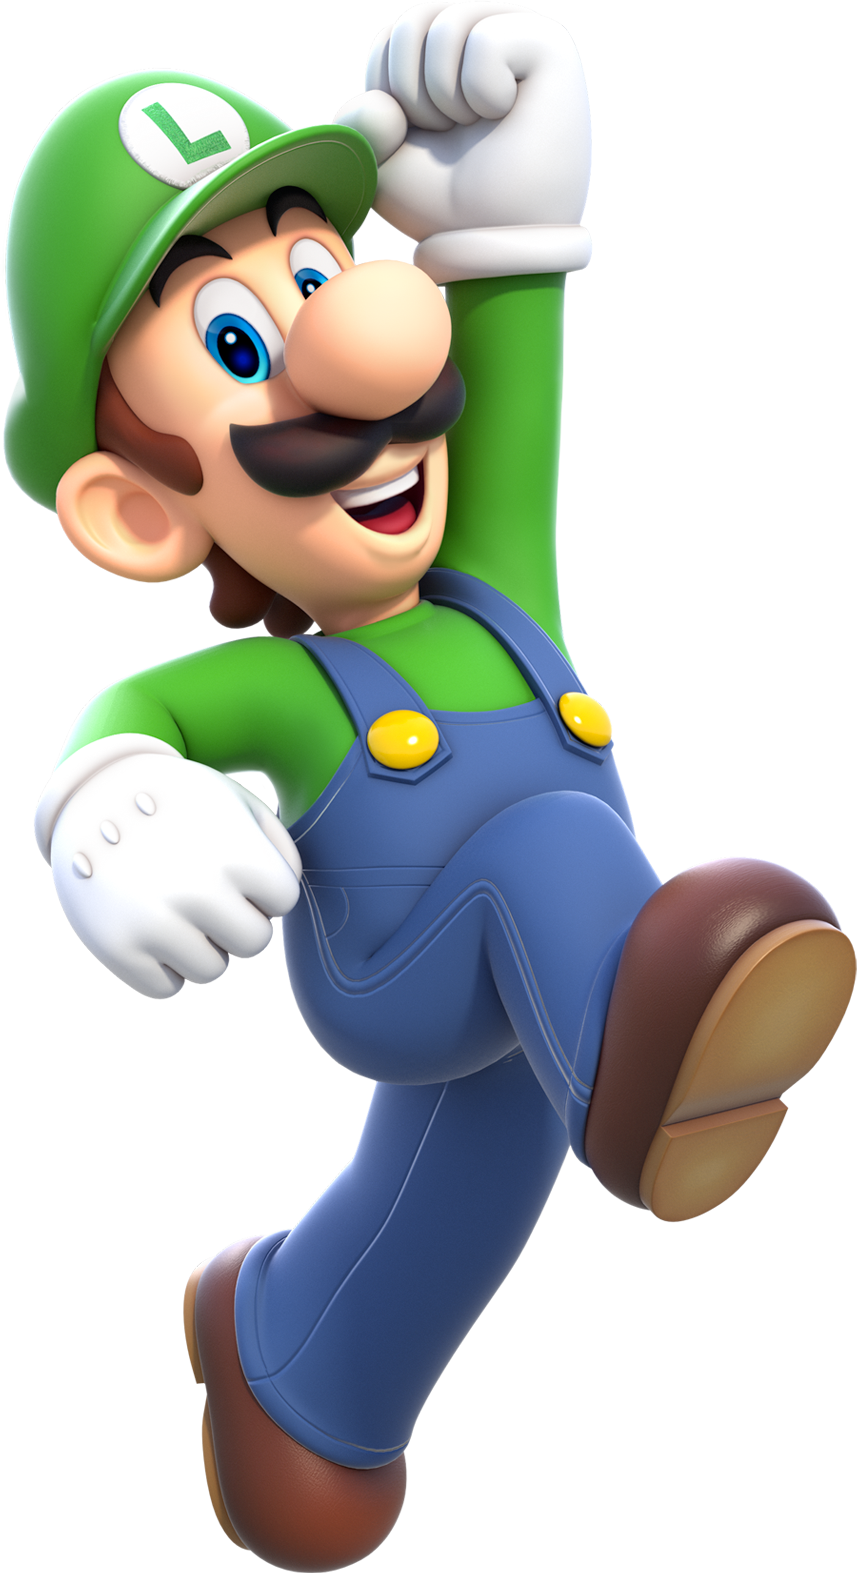 Detail Images Of Luigi And Mario Nomer 16